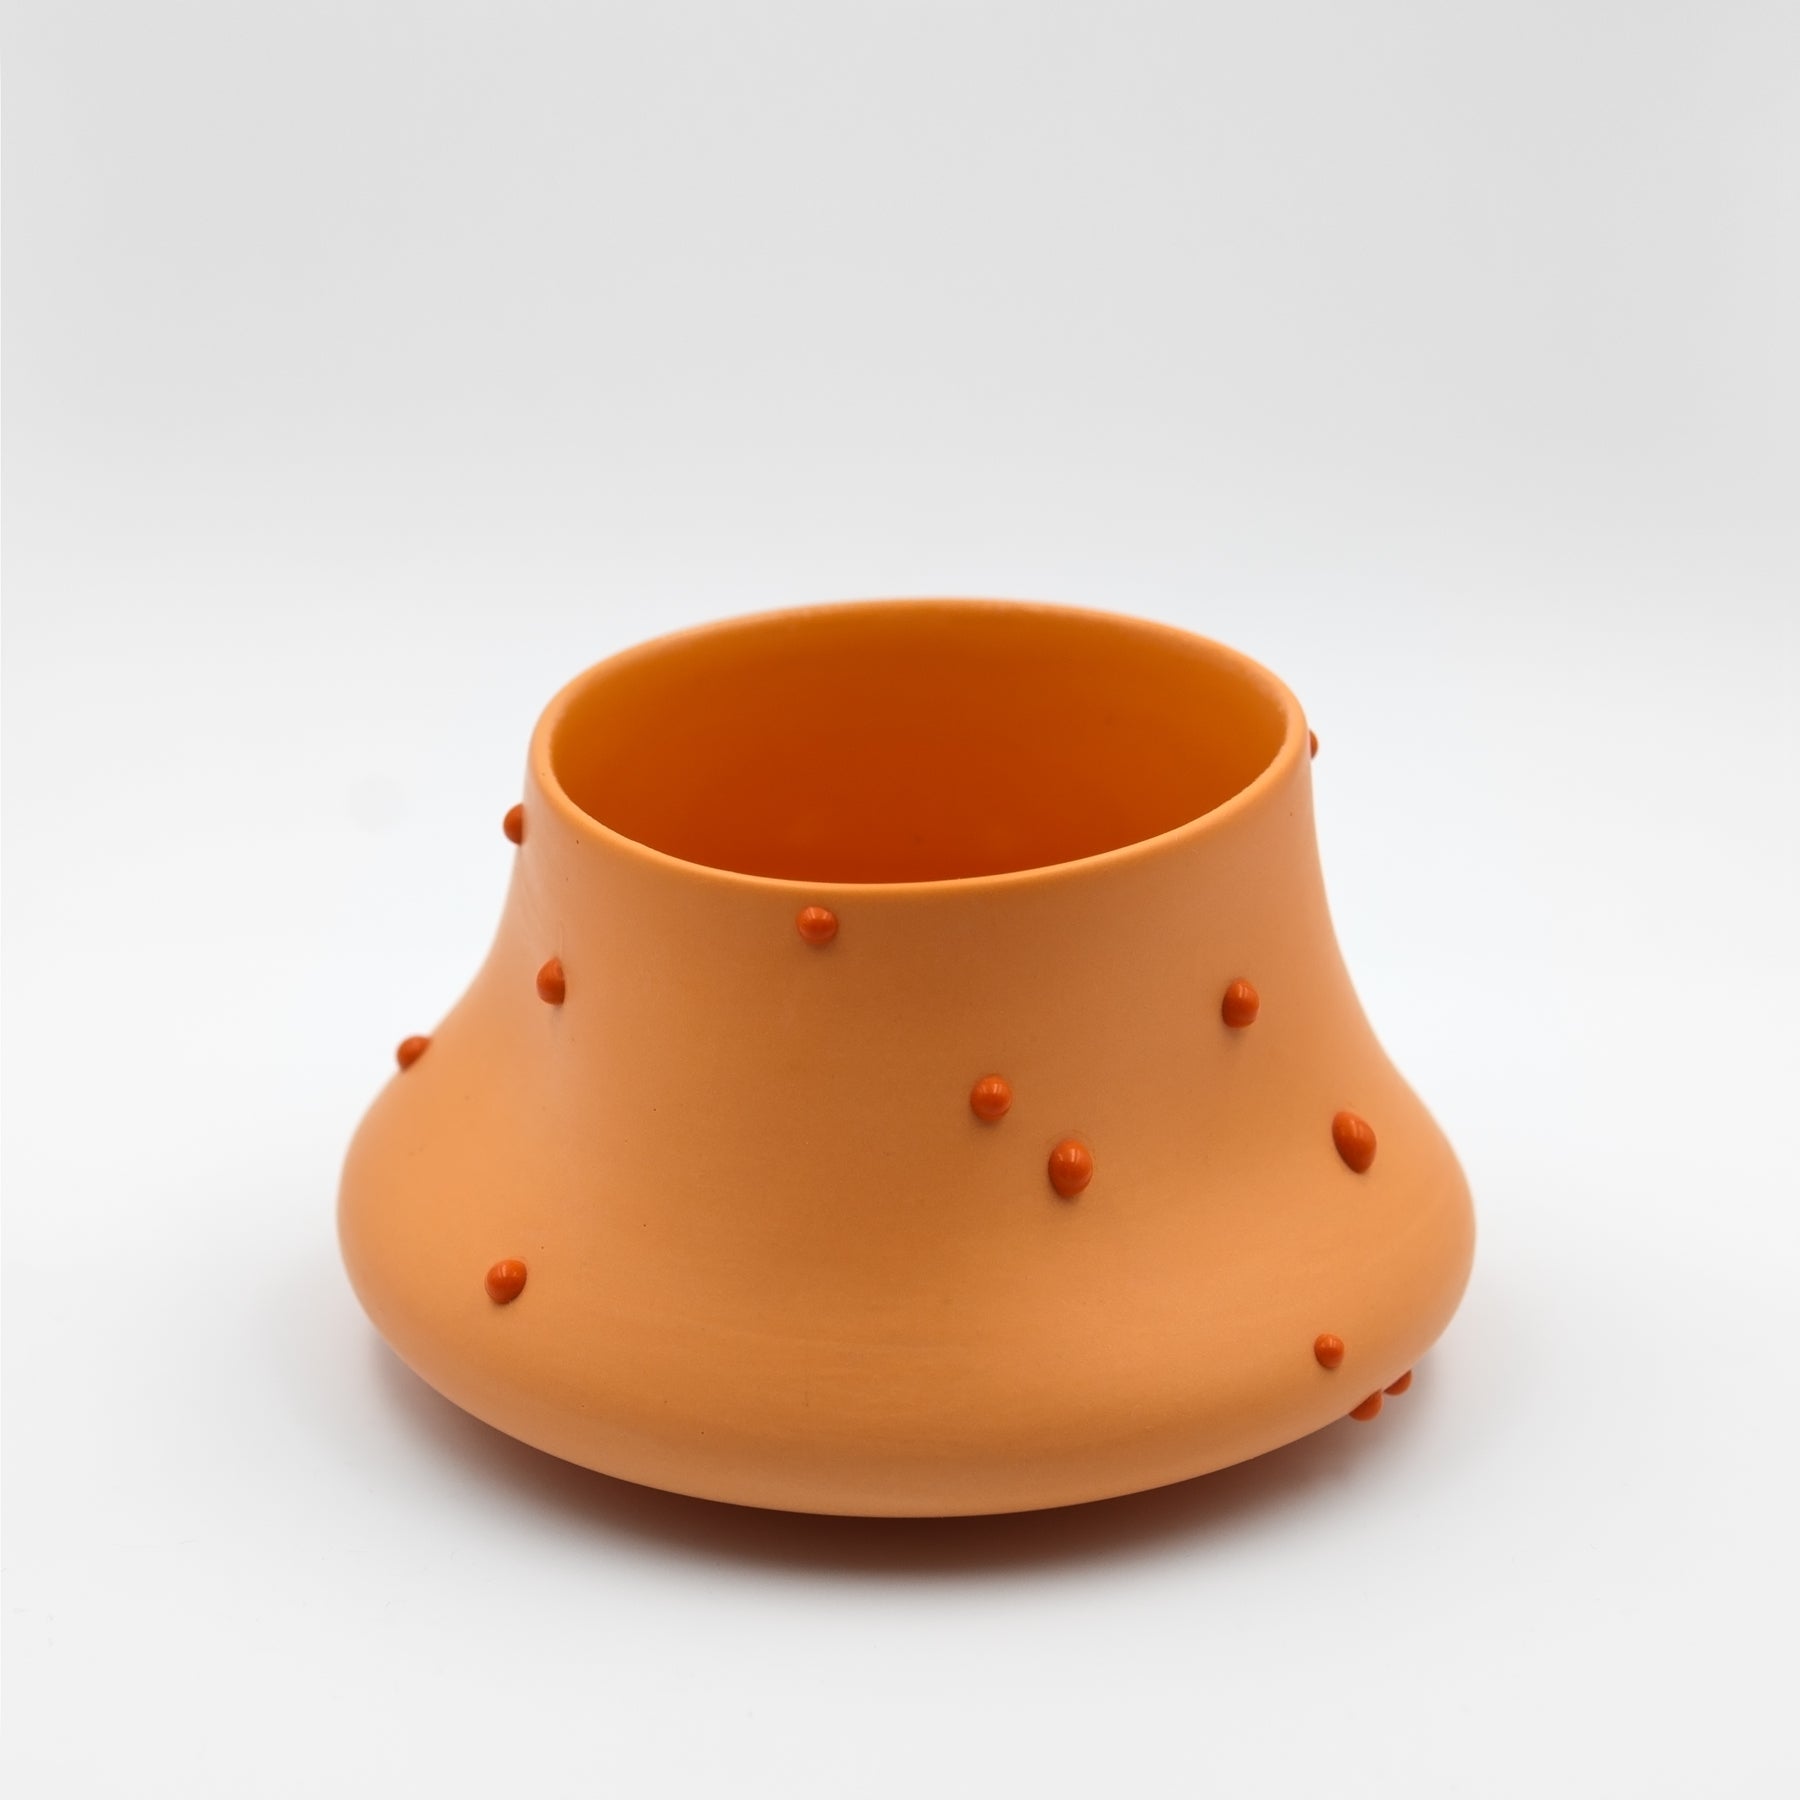 Peckii cup, double orange